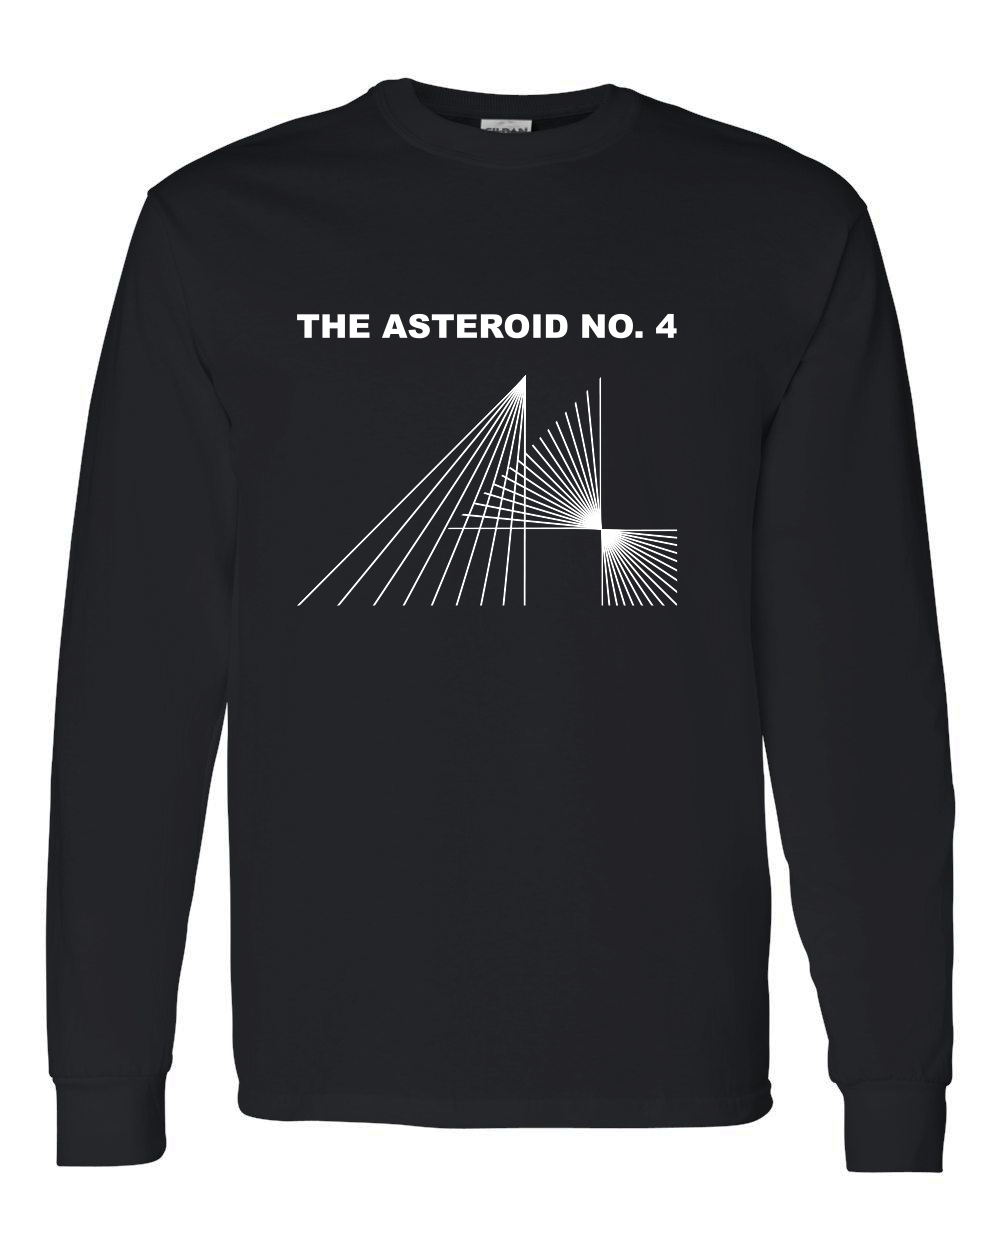 Asteroid No.4 Logo Black Long Sleeve T-shirt Black and White Logo